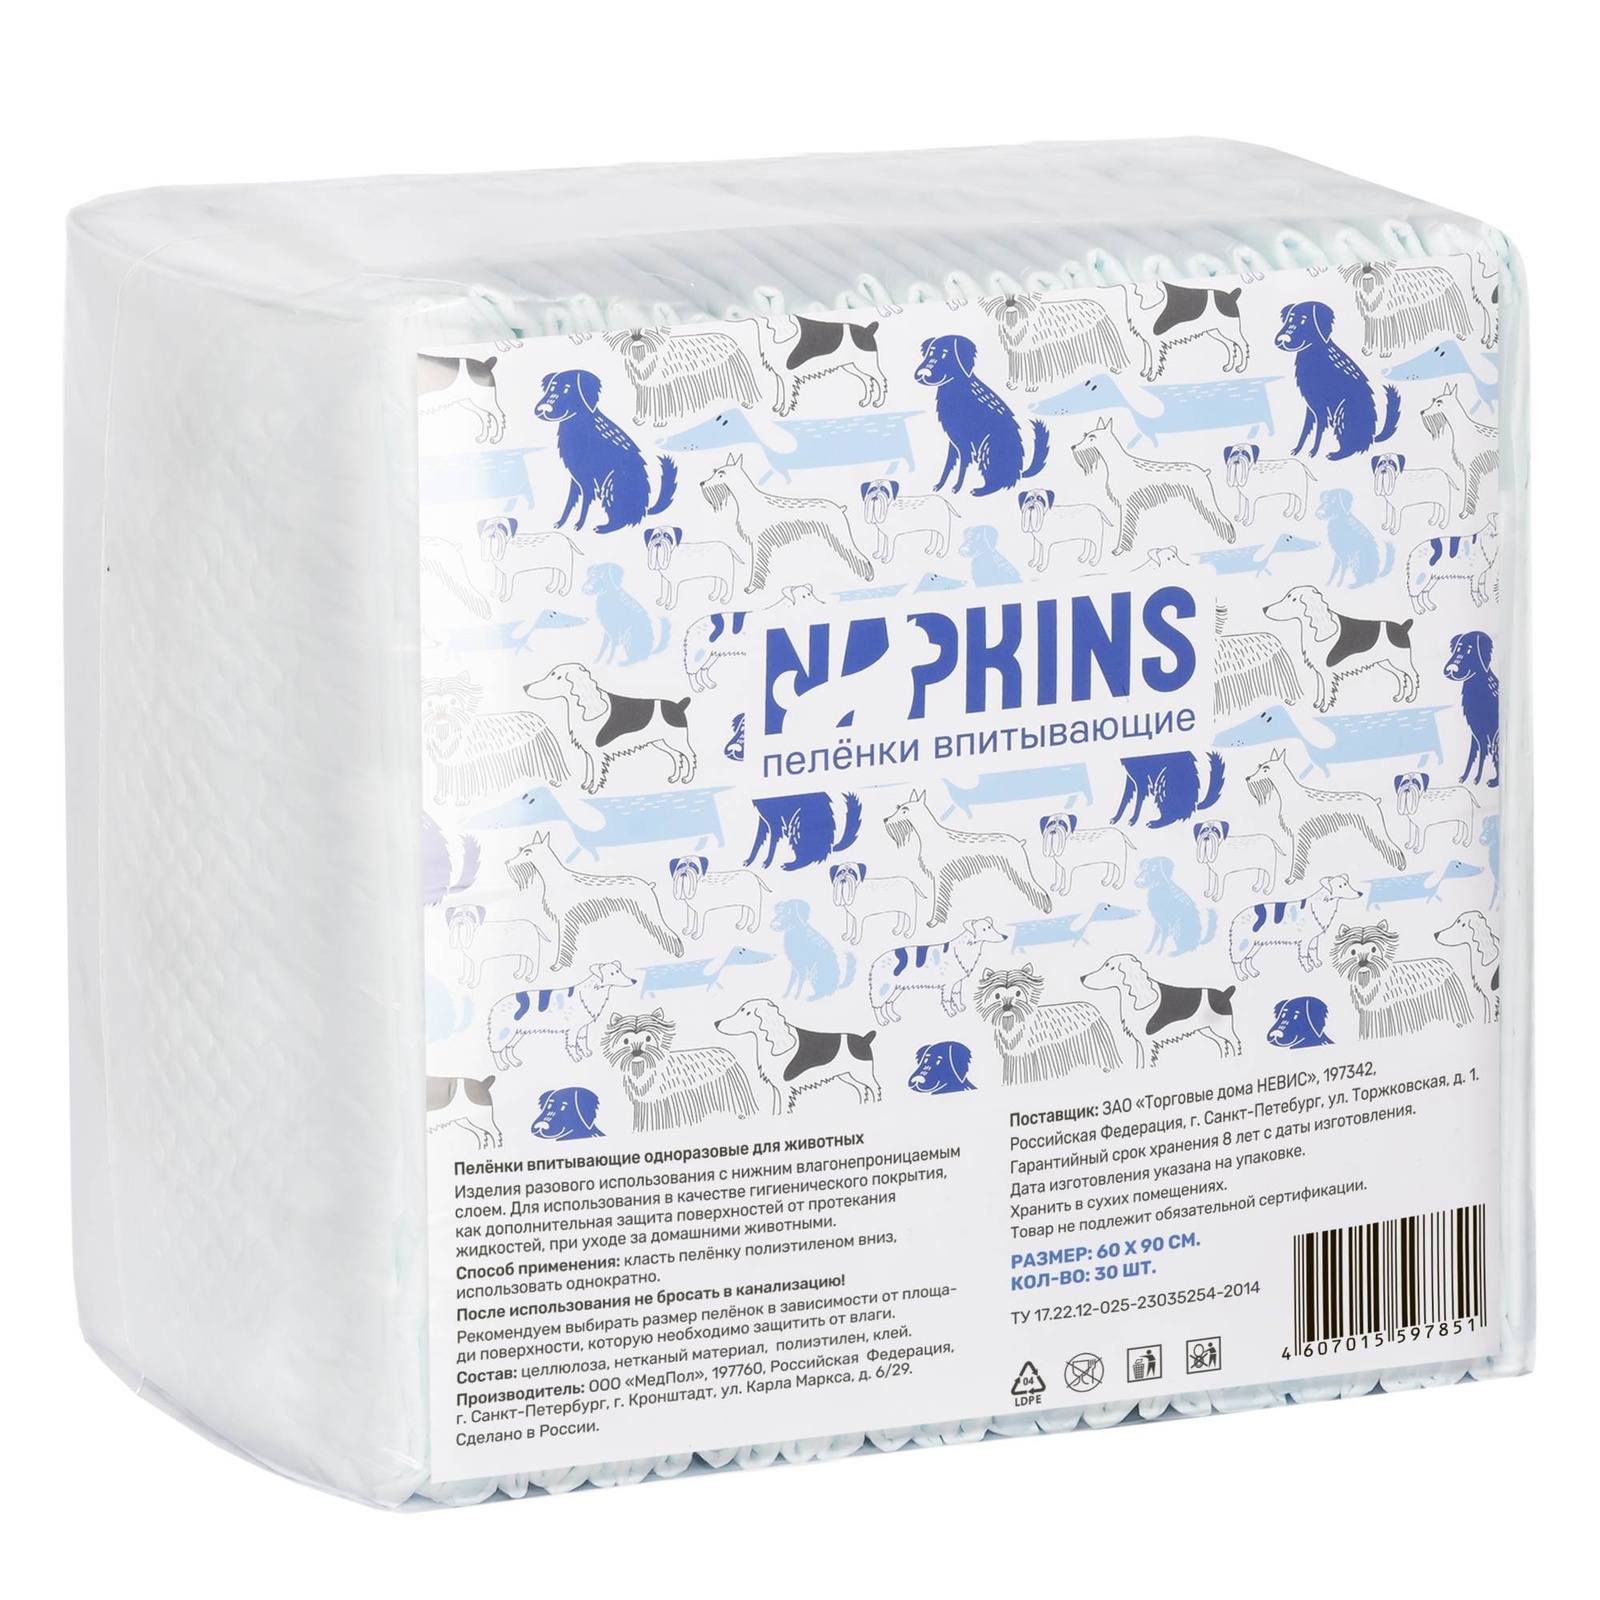 NAPKINS NAPKINS впитывающие пелёнки с целлюлозой для собак 60х90 (100 г) napkins napkins гелевые пелёнки для собак 60х90 30 шт